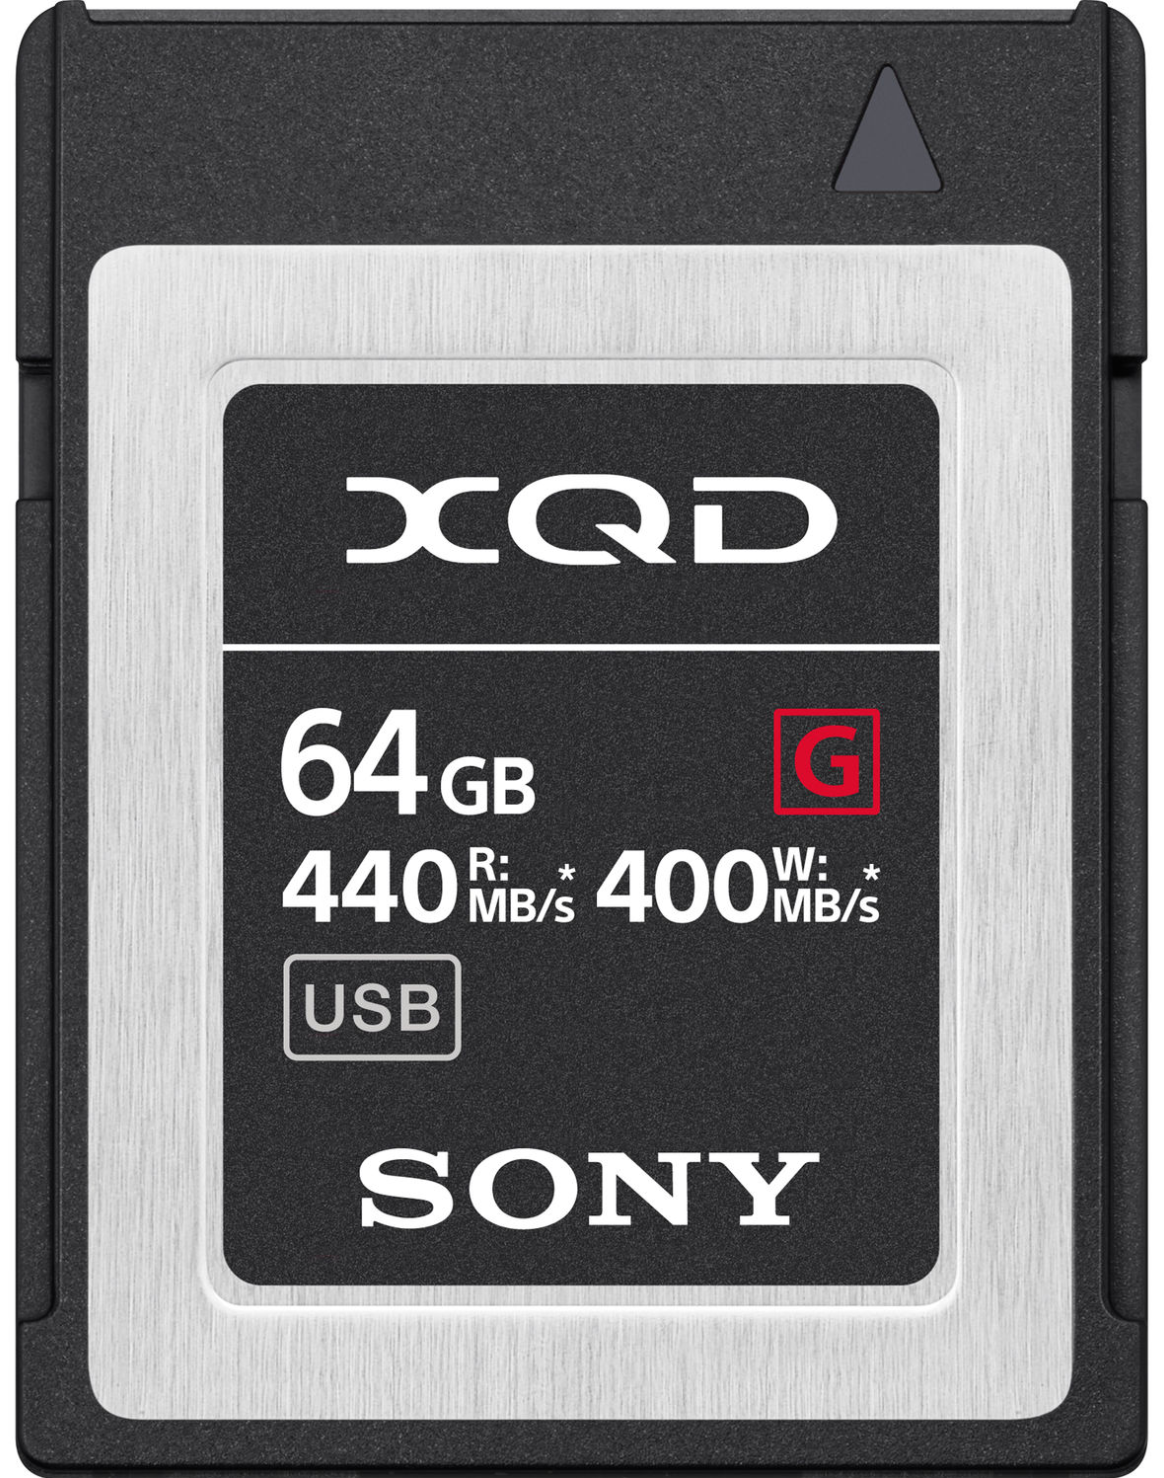 Sony 64GB XQD-G64F/J 440mb/s (Write 400mb/s)